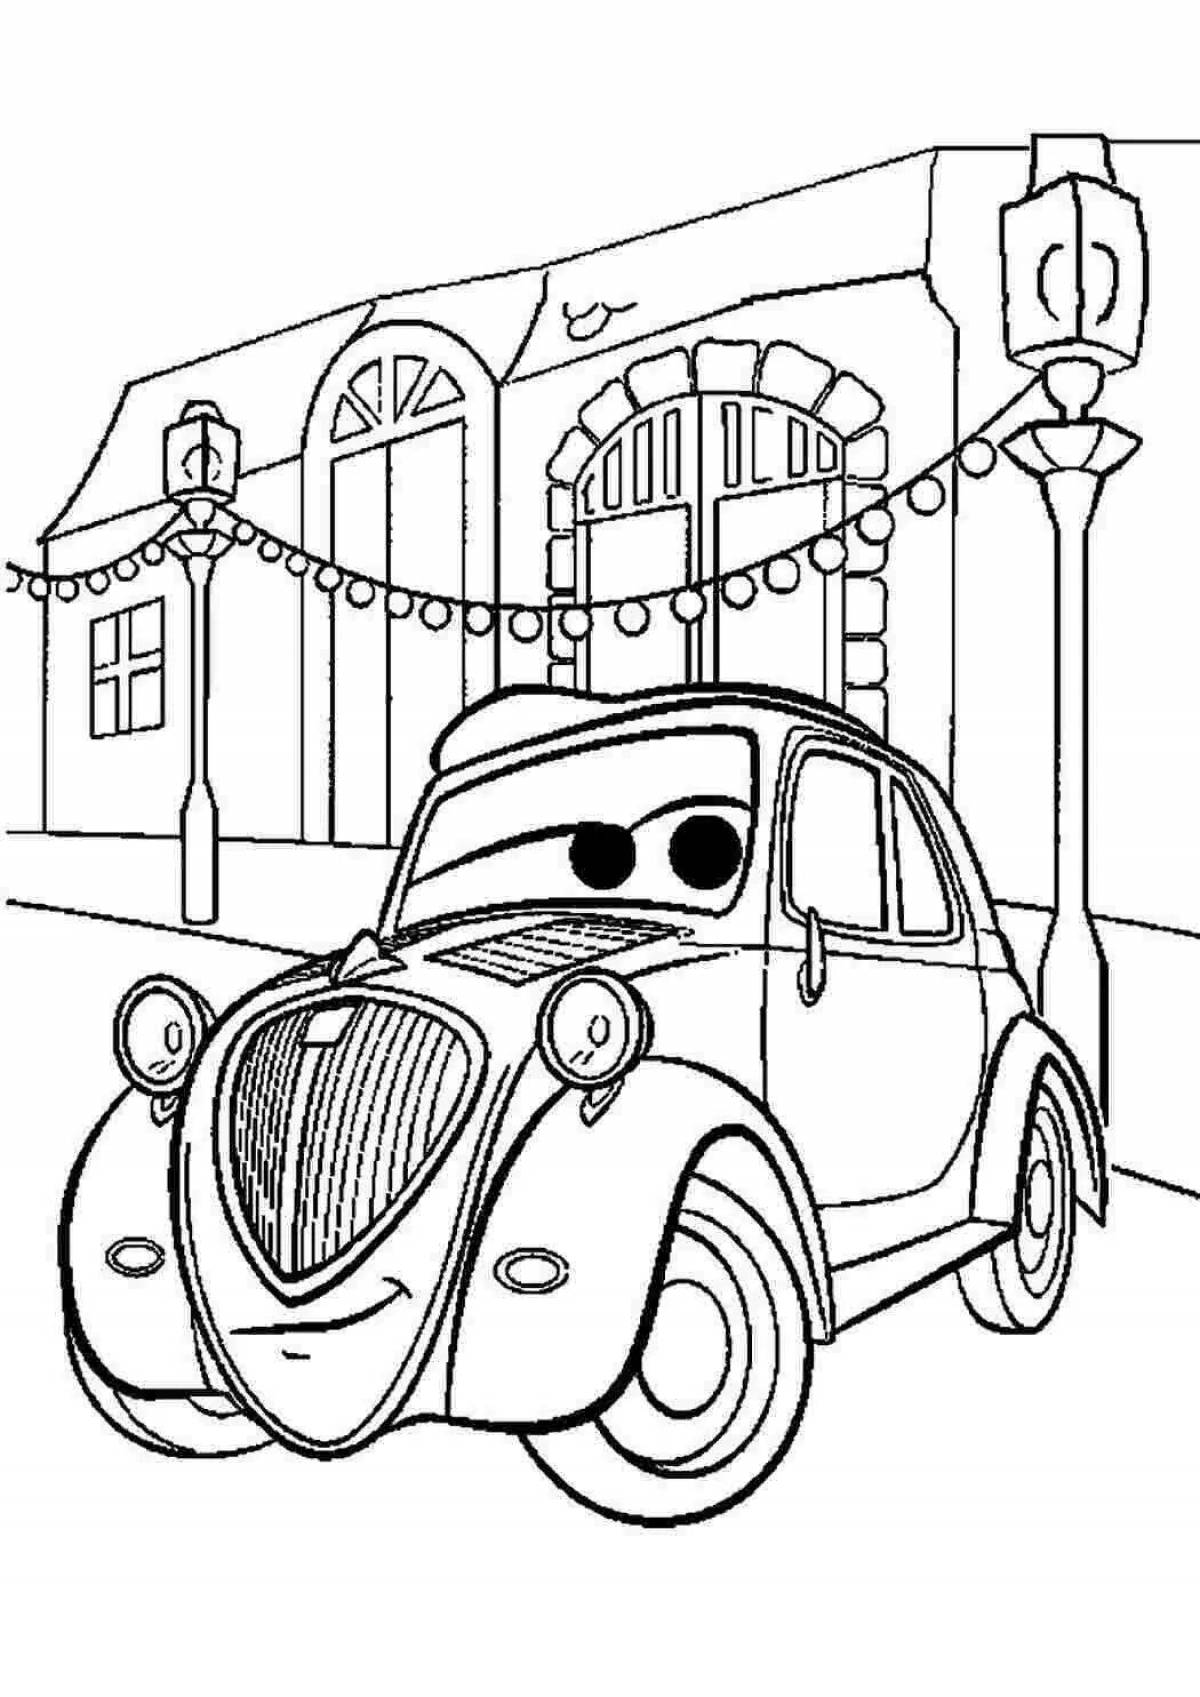 Festive car coloring book